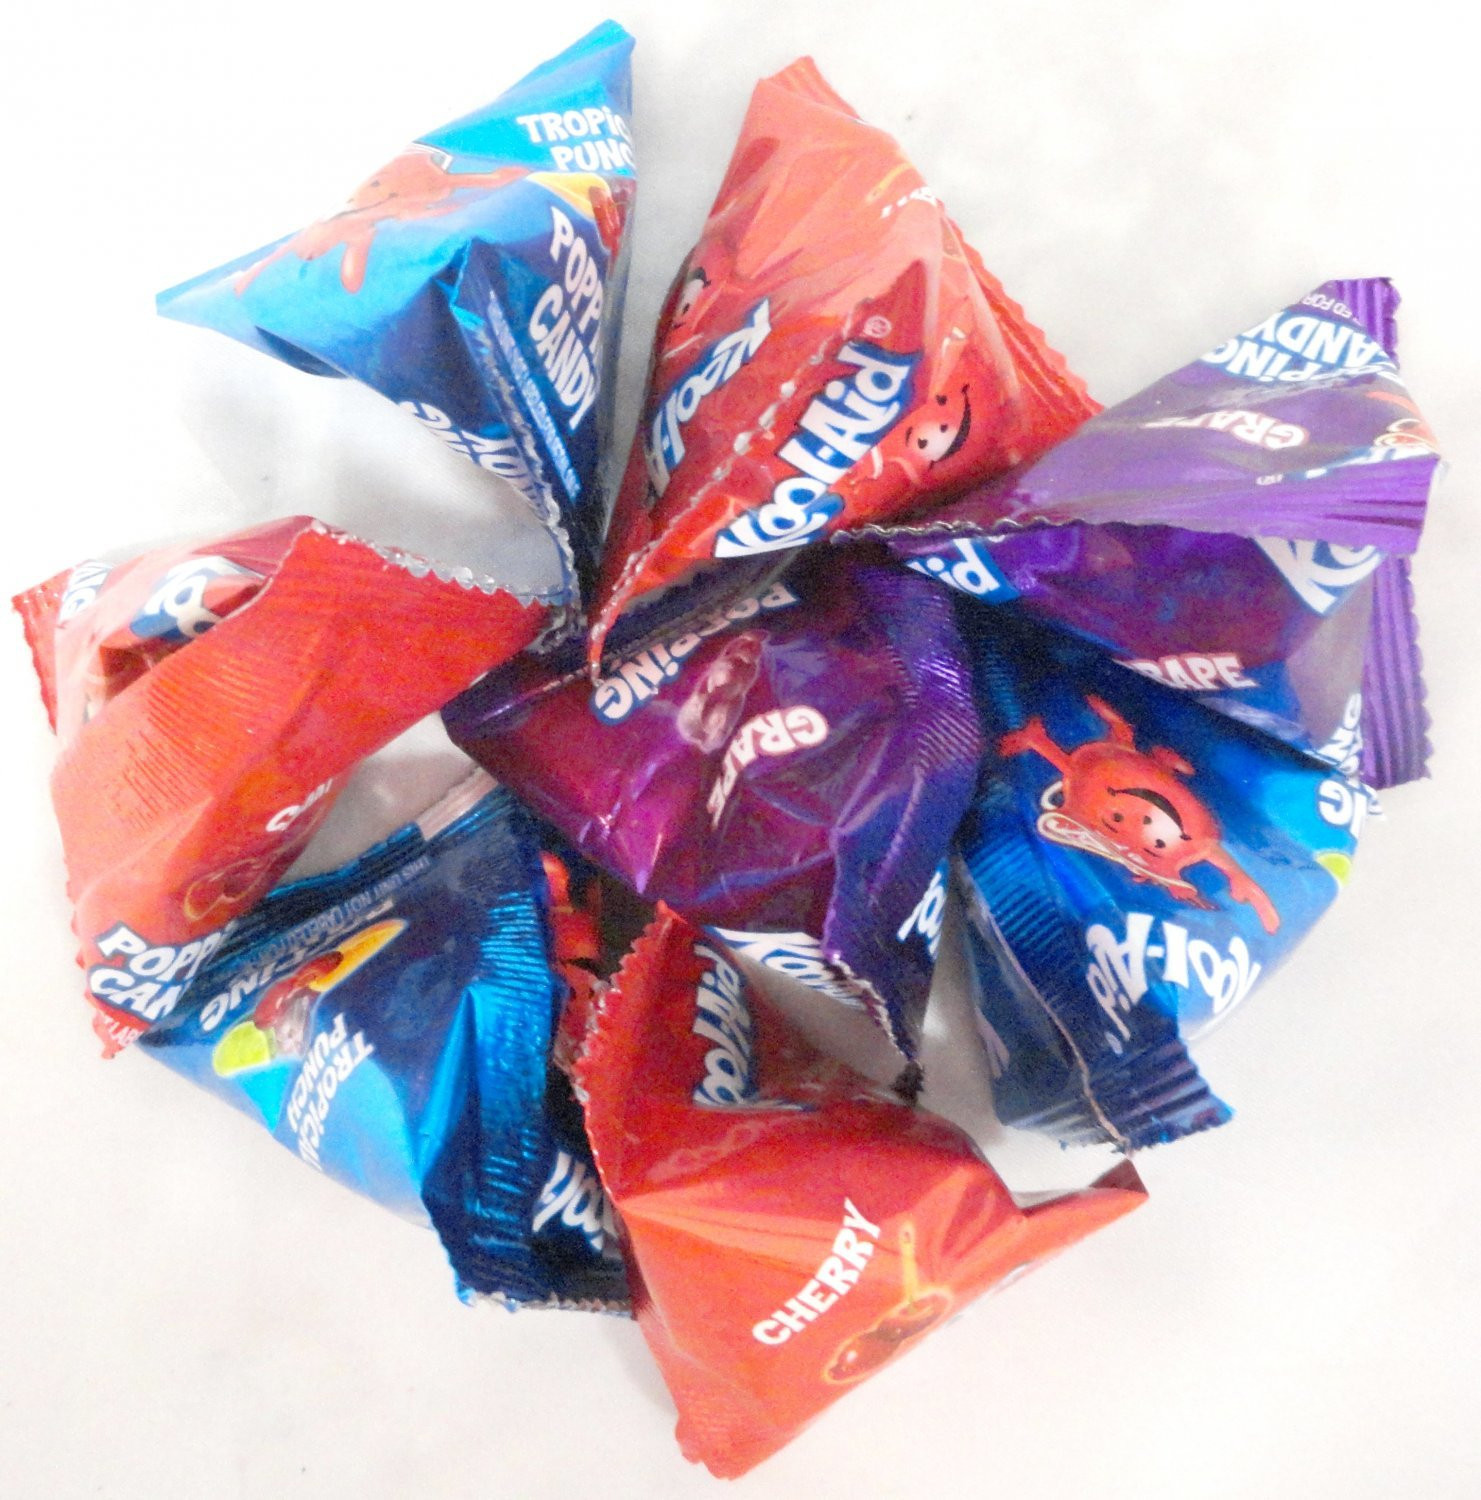 Kool-Aid Kool-Aid 40ct. Popping Candy Gusset Bag 